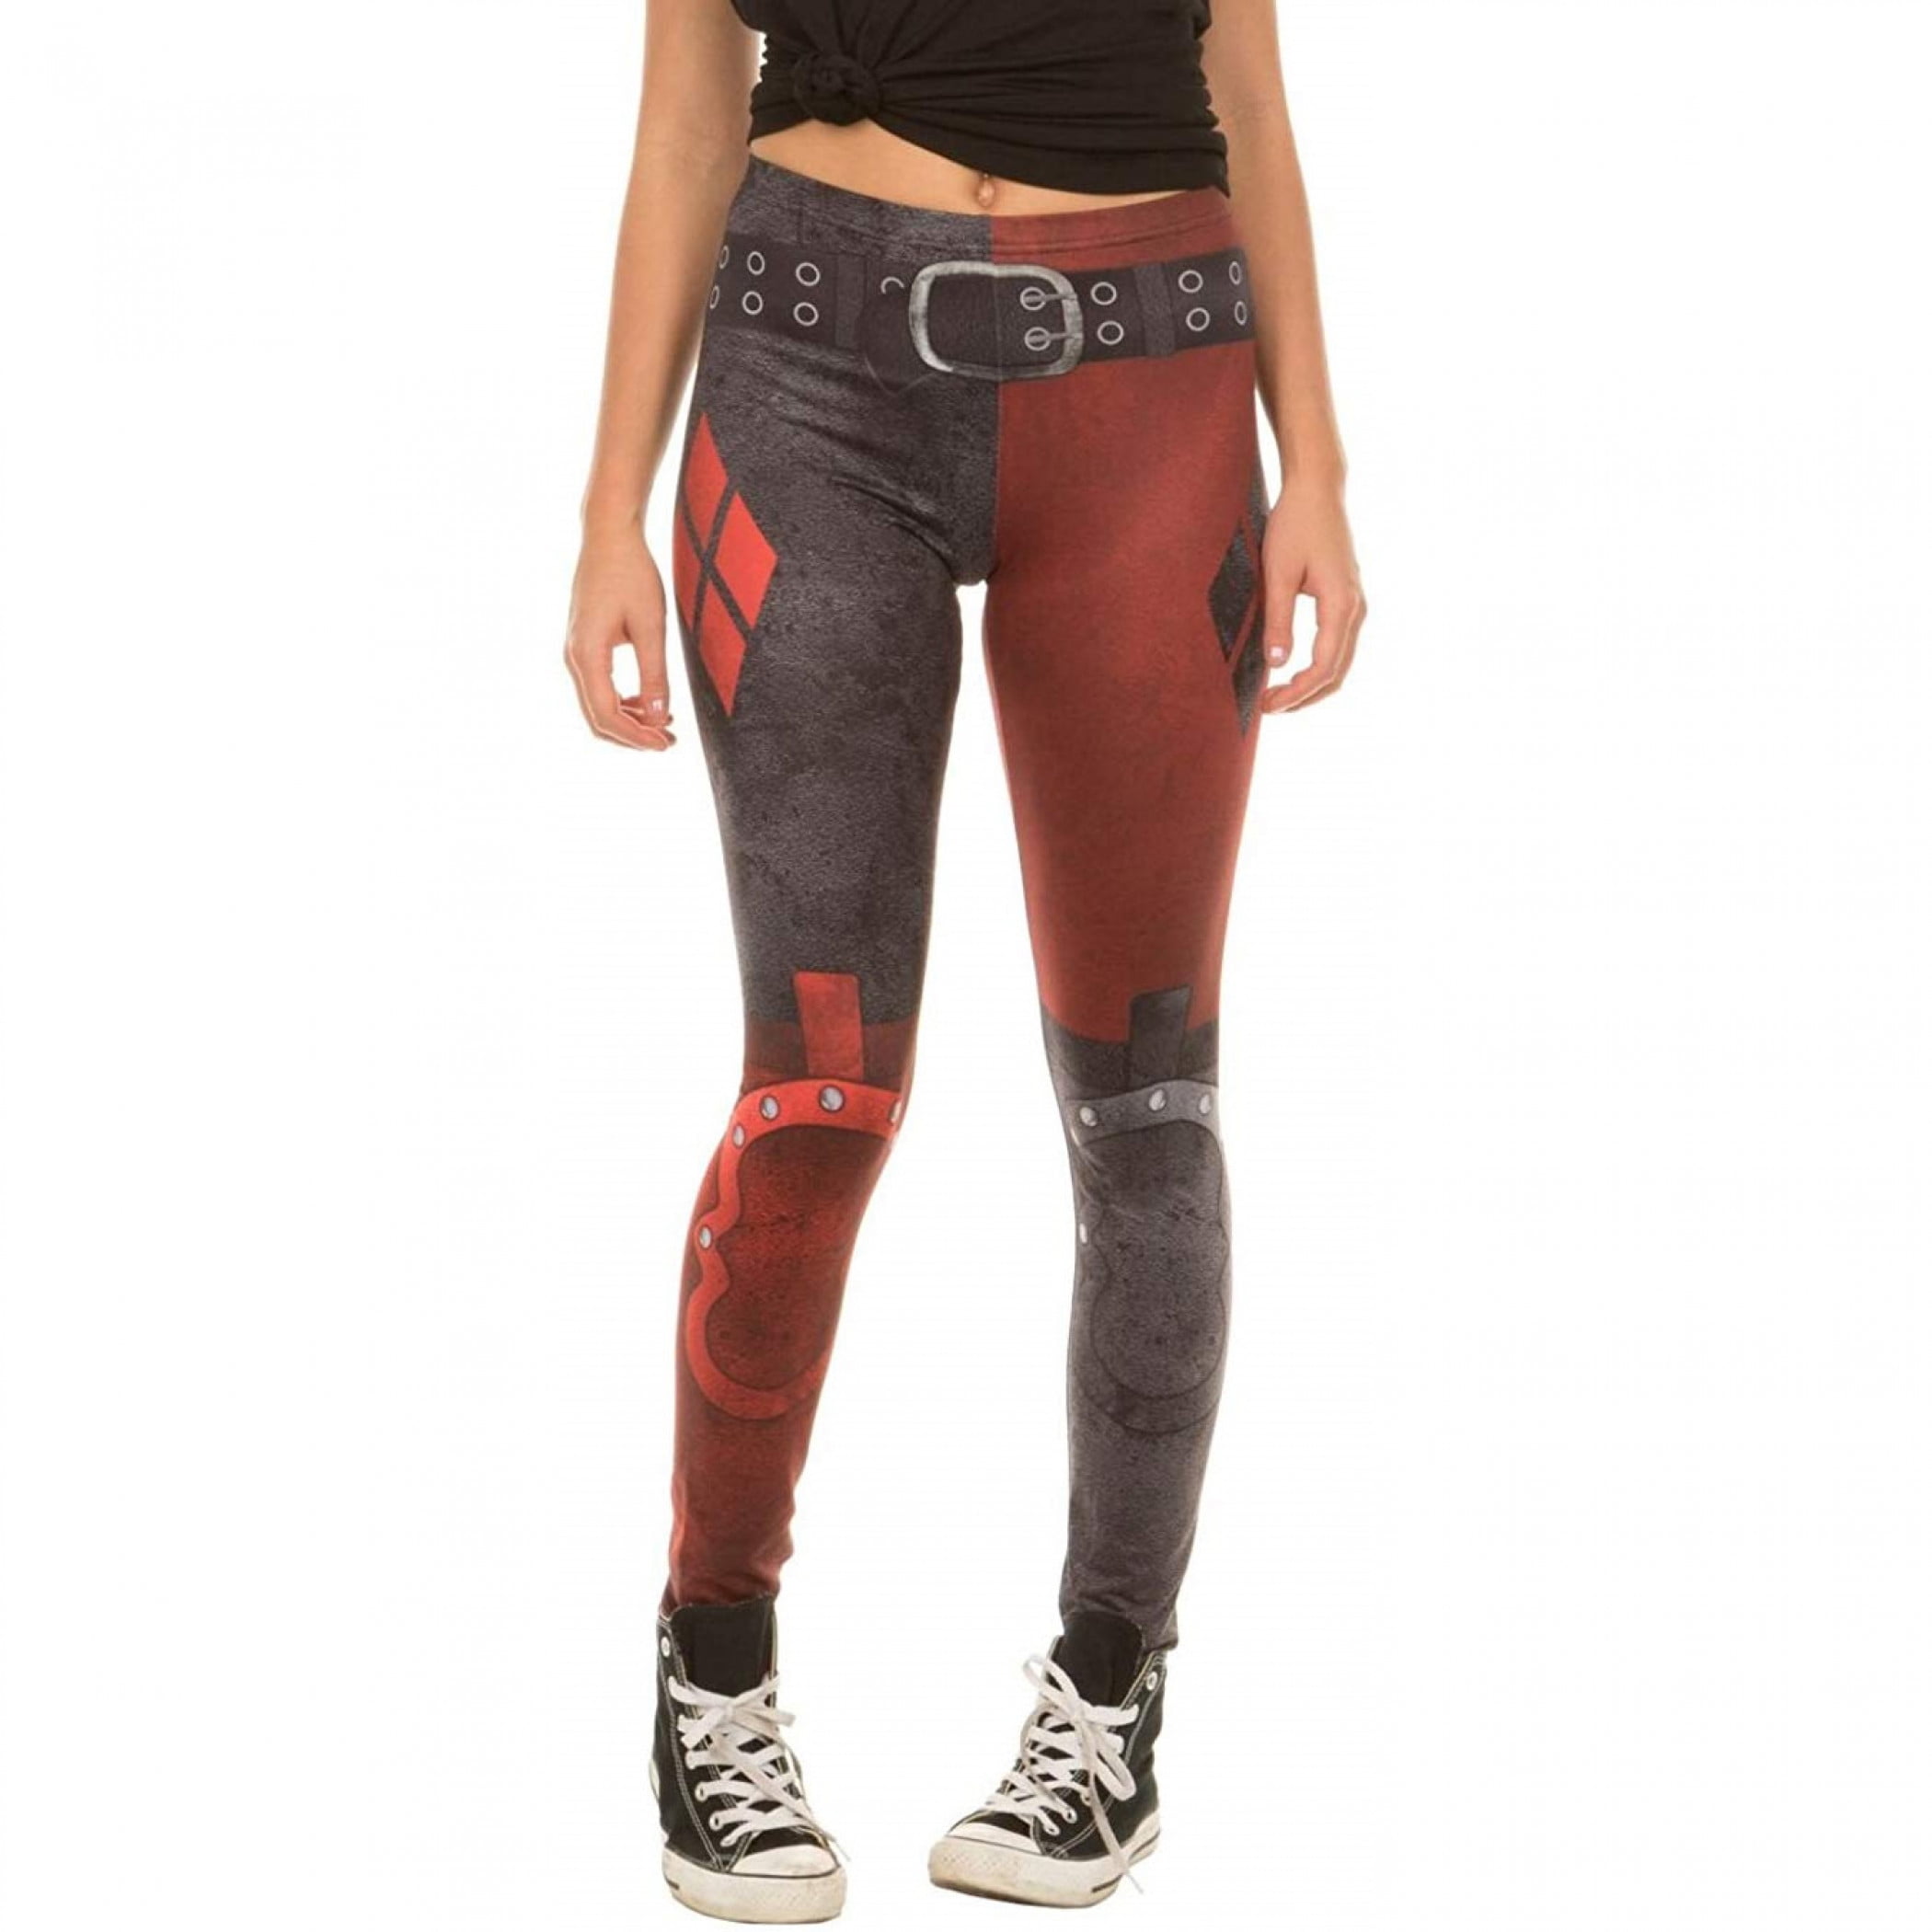 Harley Quinn Black and Red Leggings – REAL INFINITY WAR